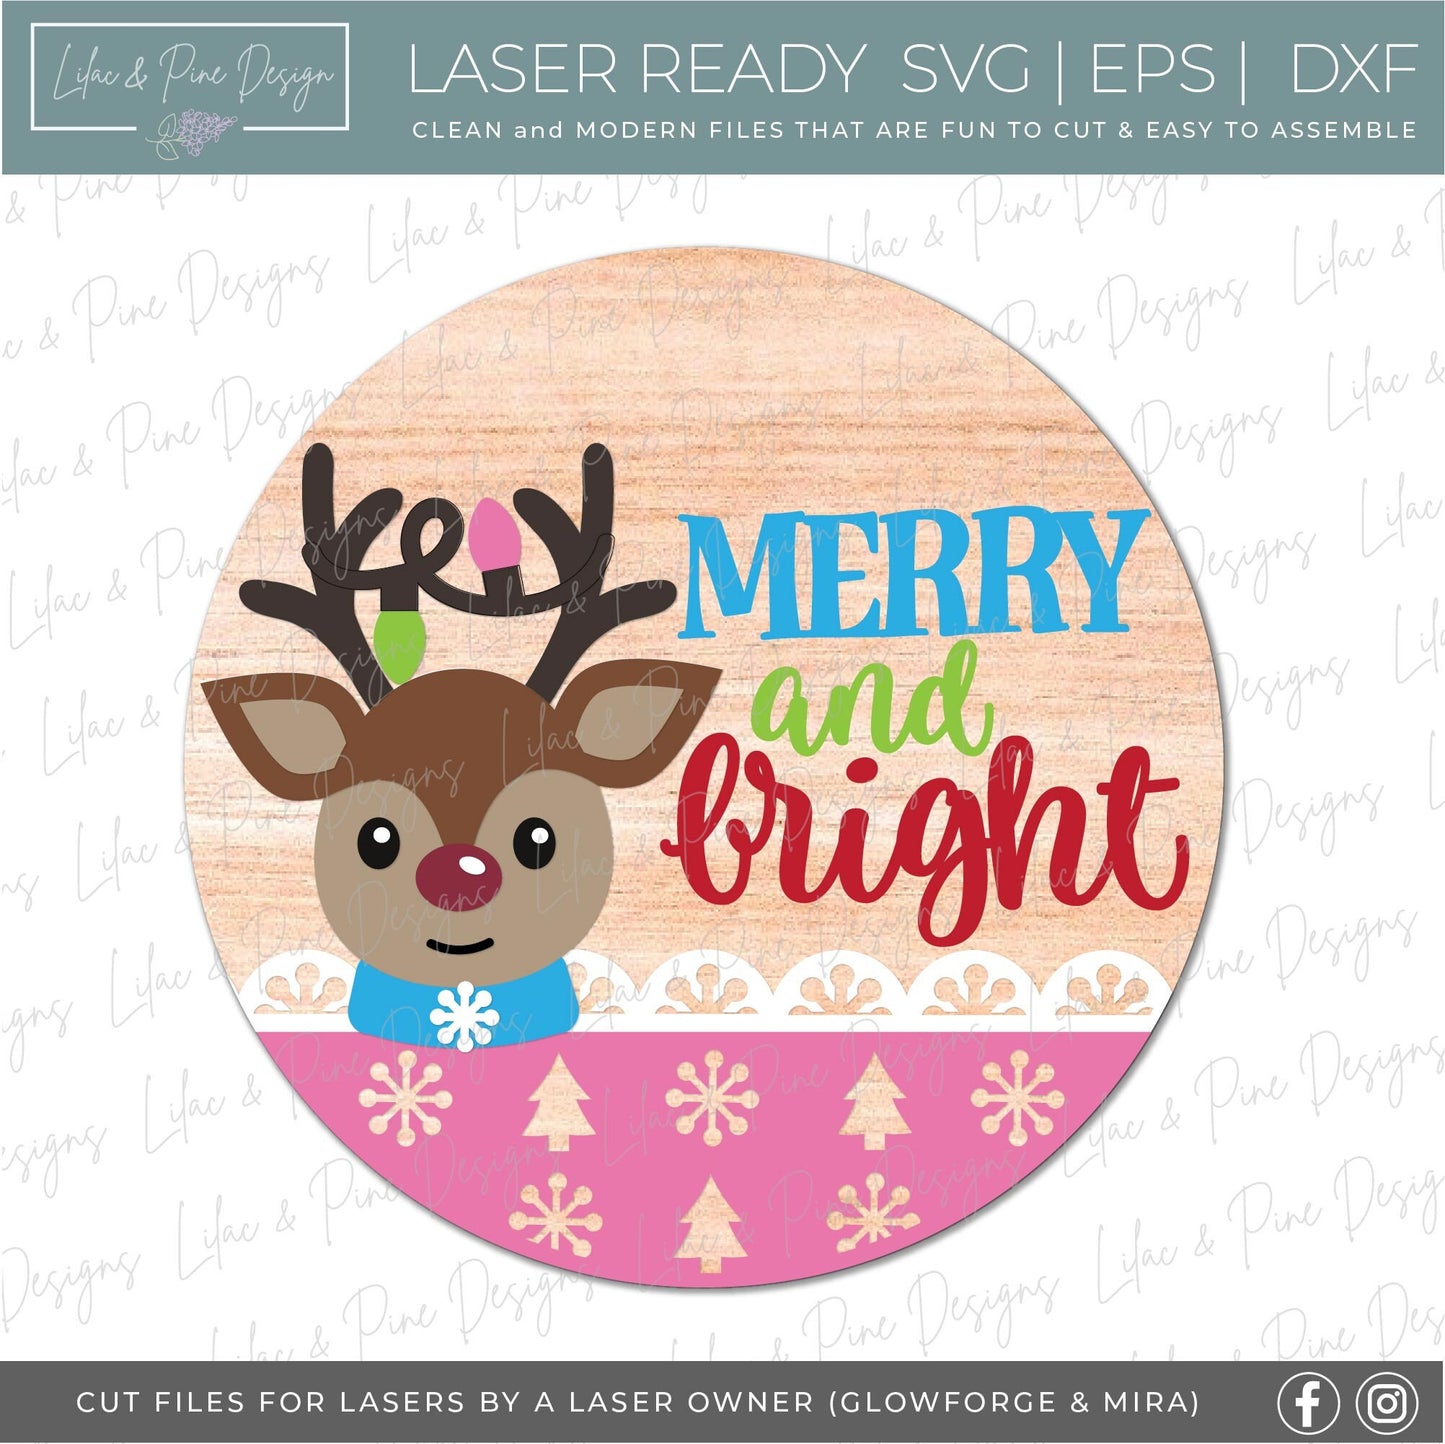 Merry and bright sign SVG, Reindeer door hanger, cute Christmas welcome sign SVG, Glowforge Svg, laser cut file, digital download